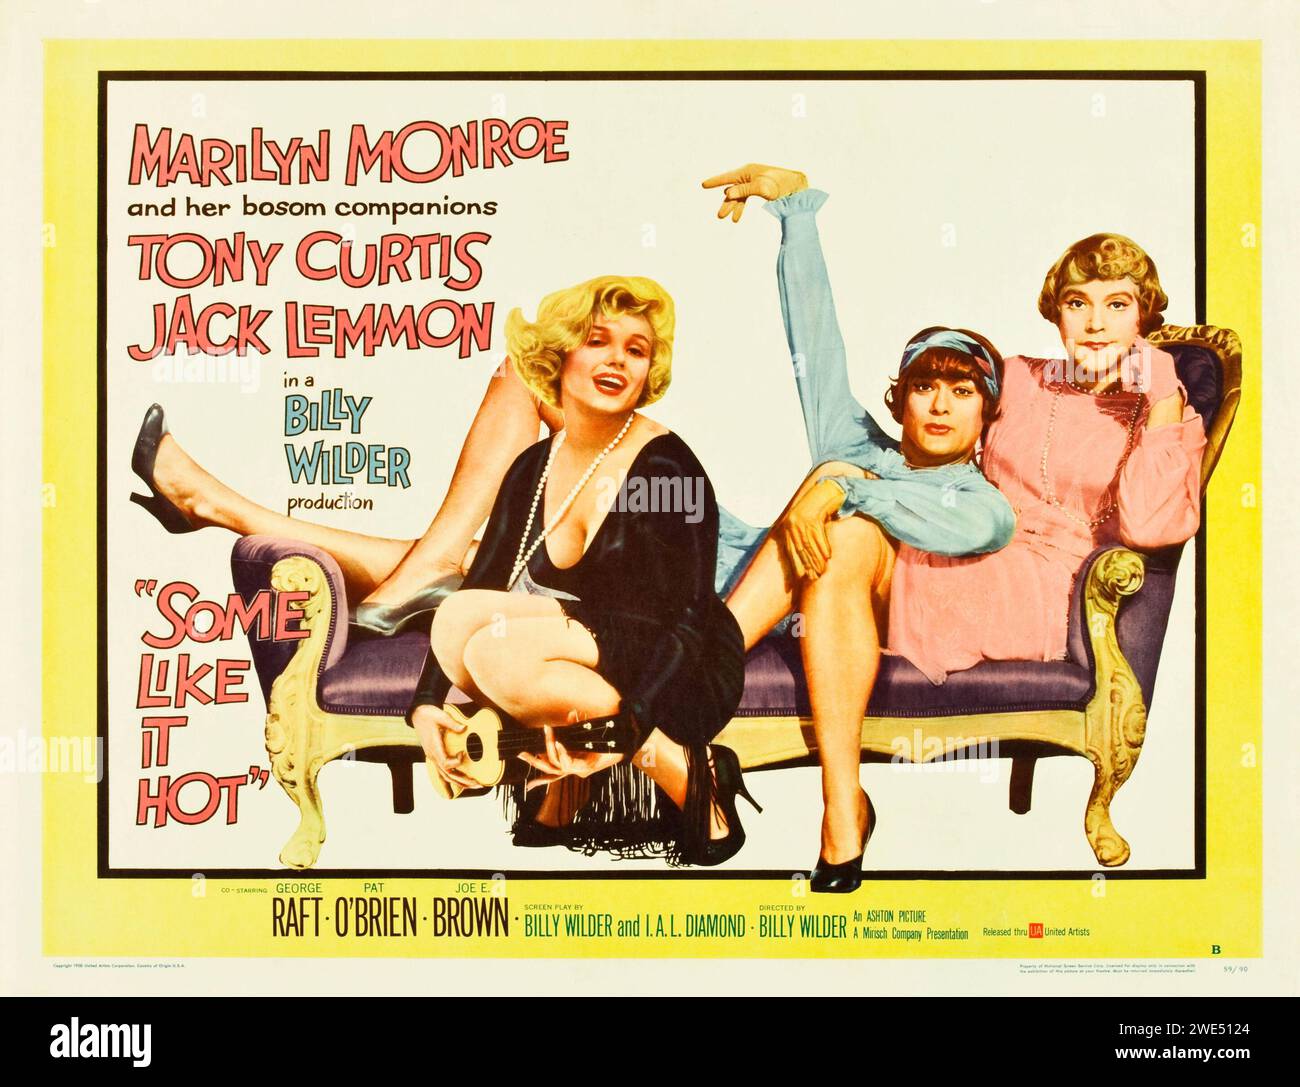 Some Like It Hot (United Artists, 1959). Vintage film poster. Marilyn Monroe, Tony Curtis, Jack Lemmon. Stock Photo